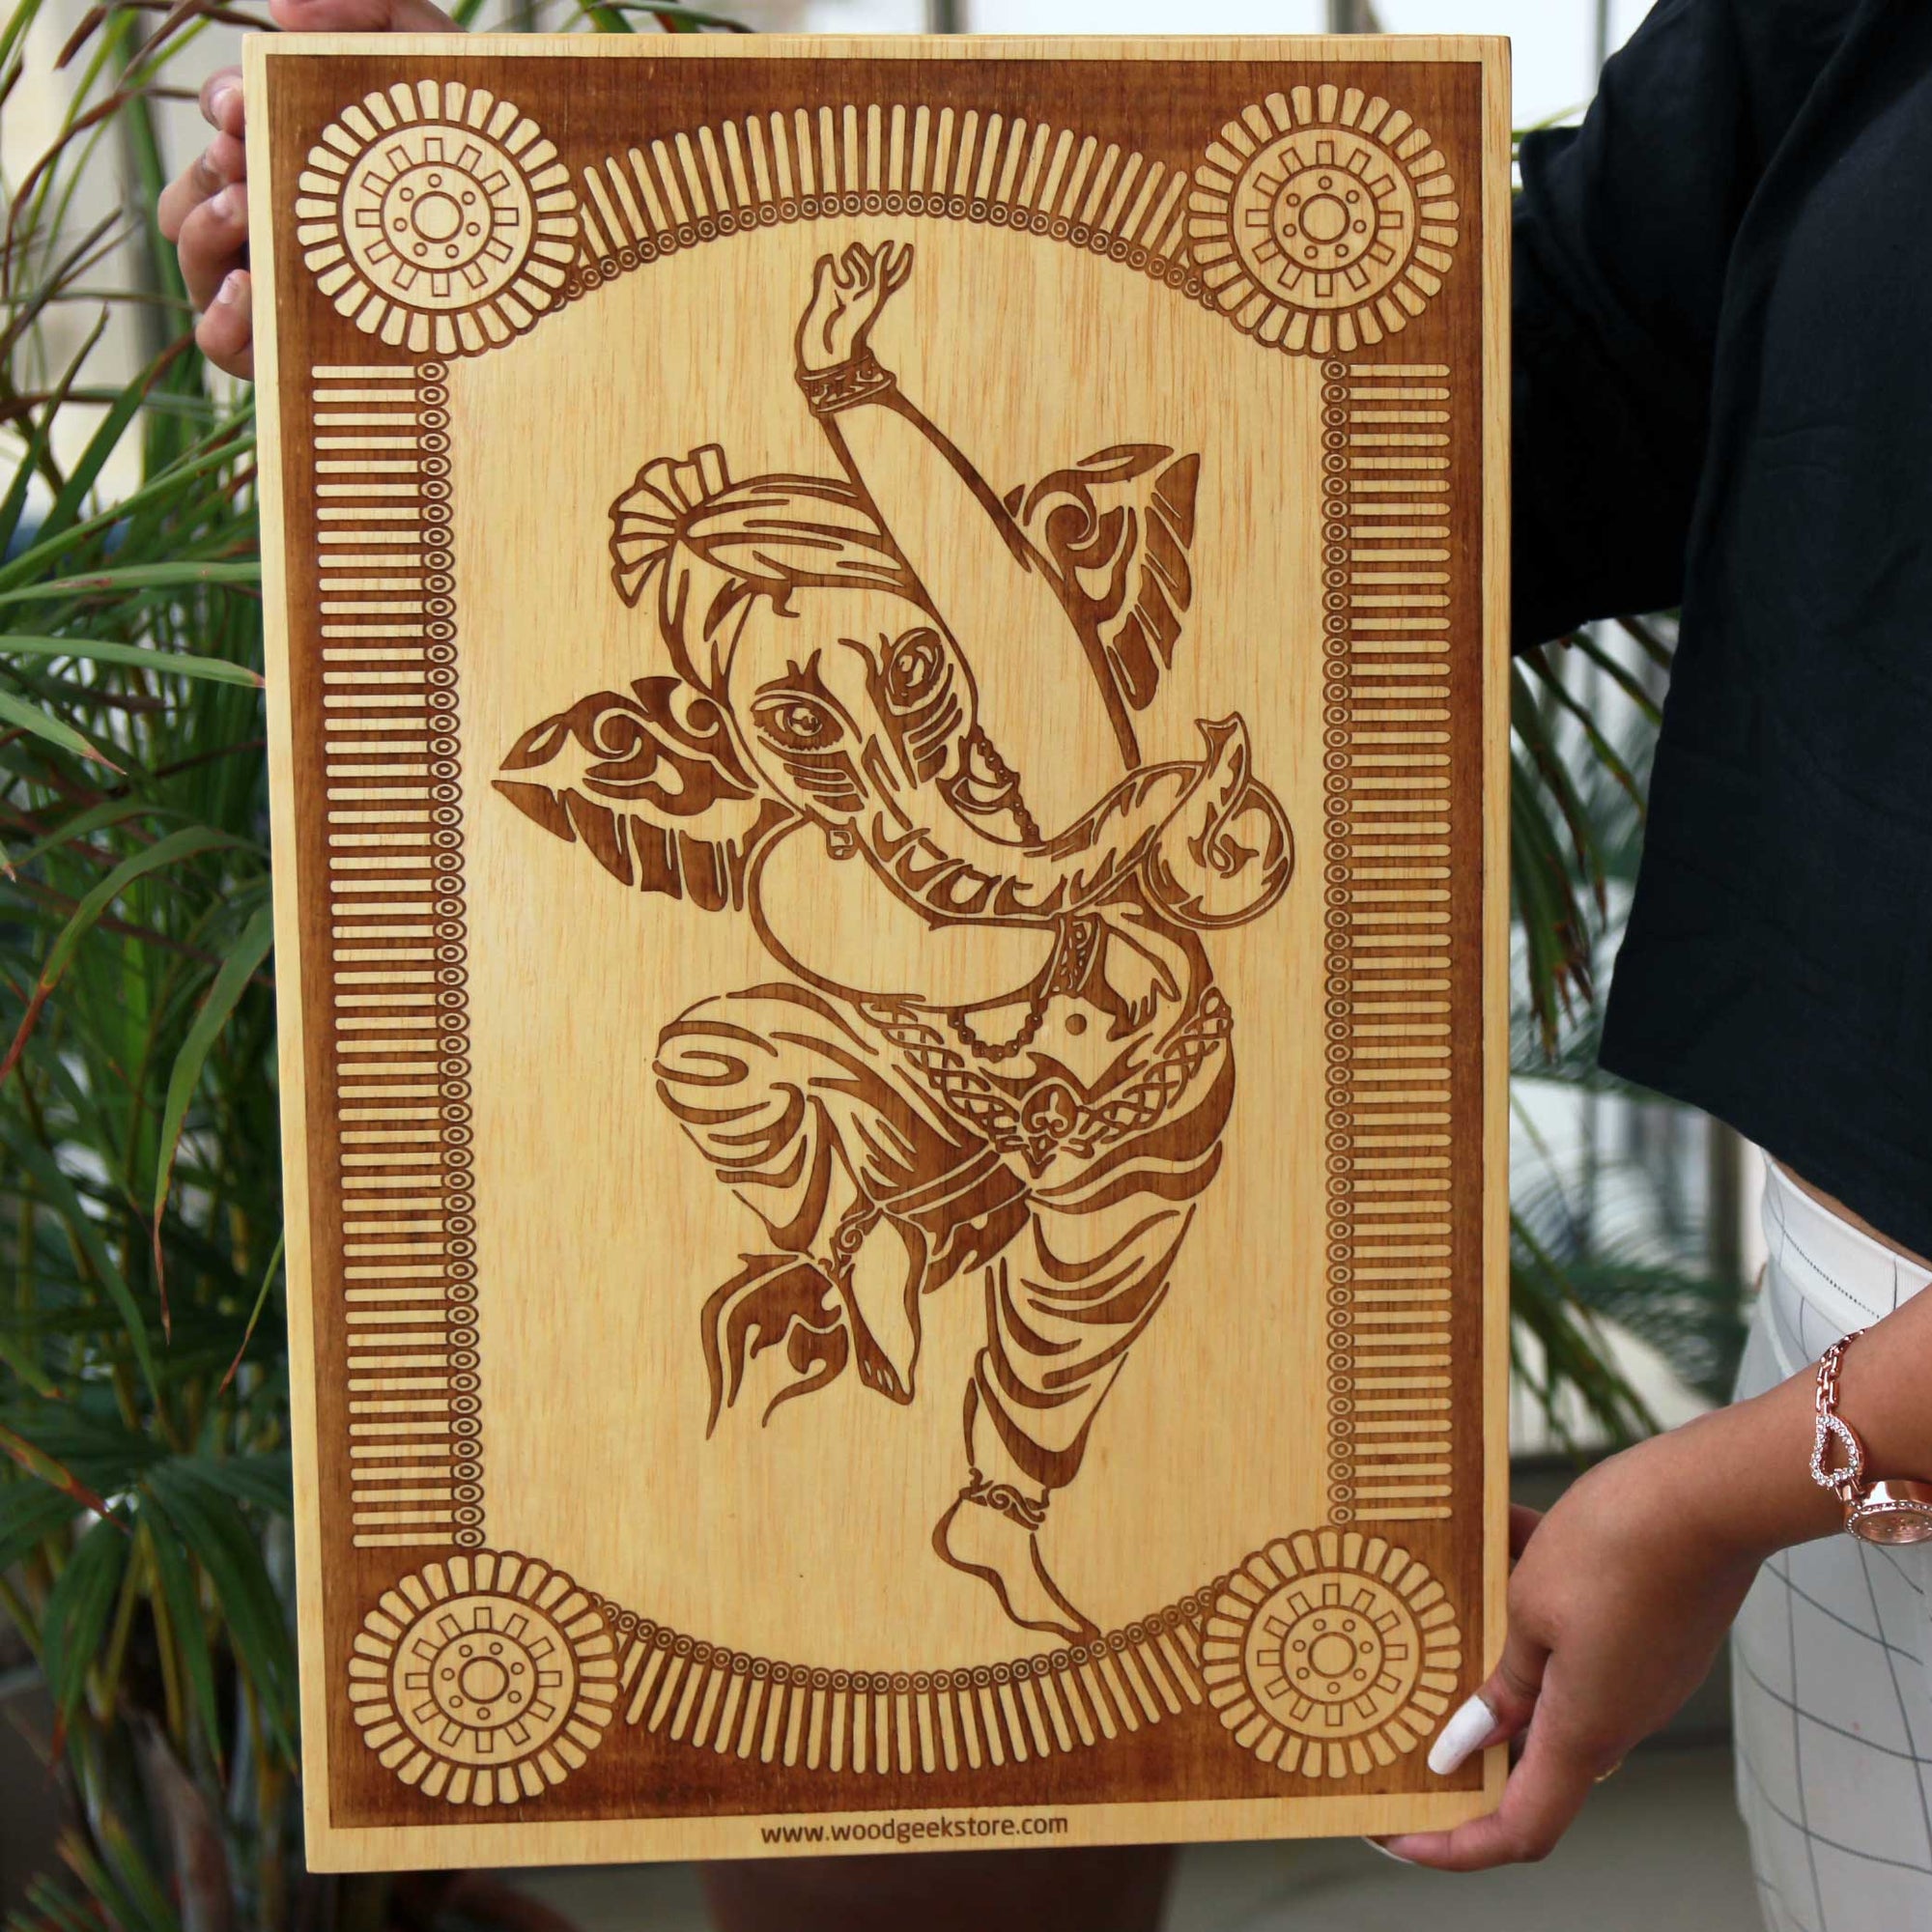 The Dancing Ganesha Carved Wooden Poster